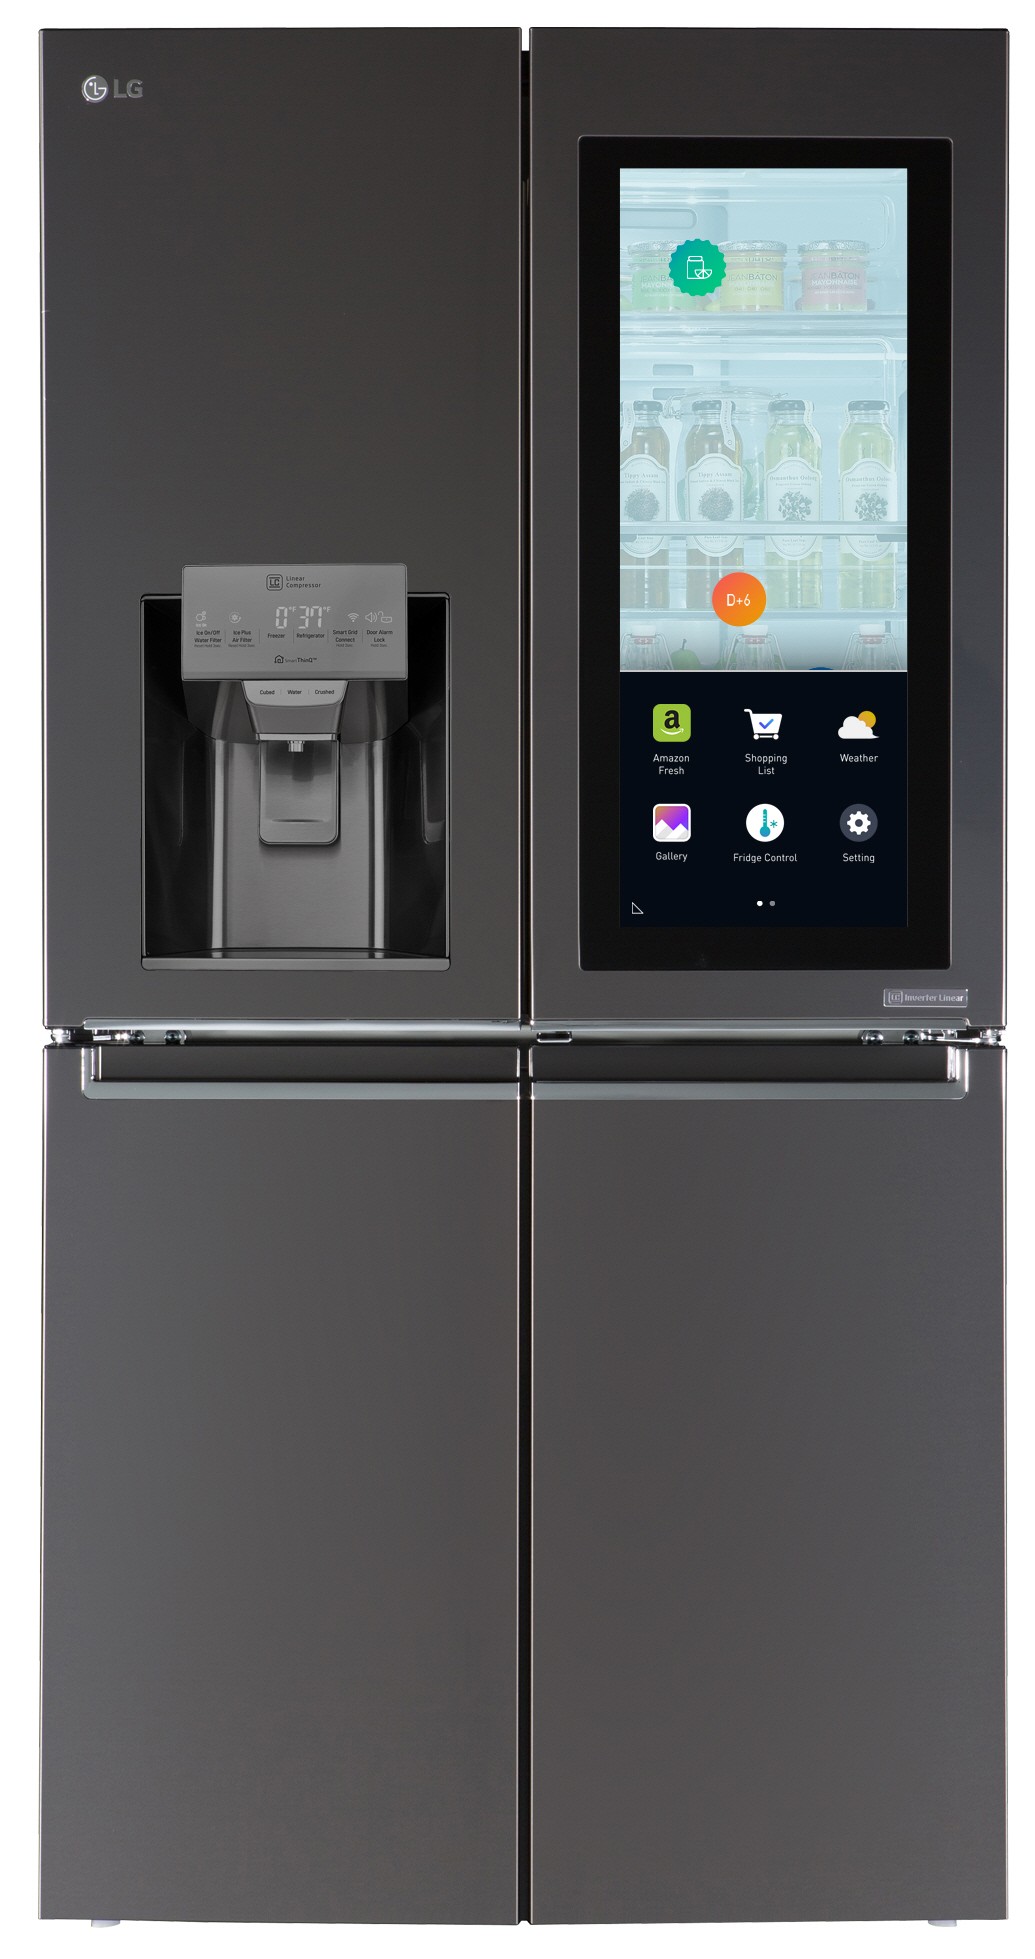 LG Smart Instaview Refrigerator 01 